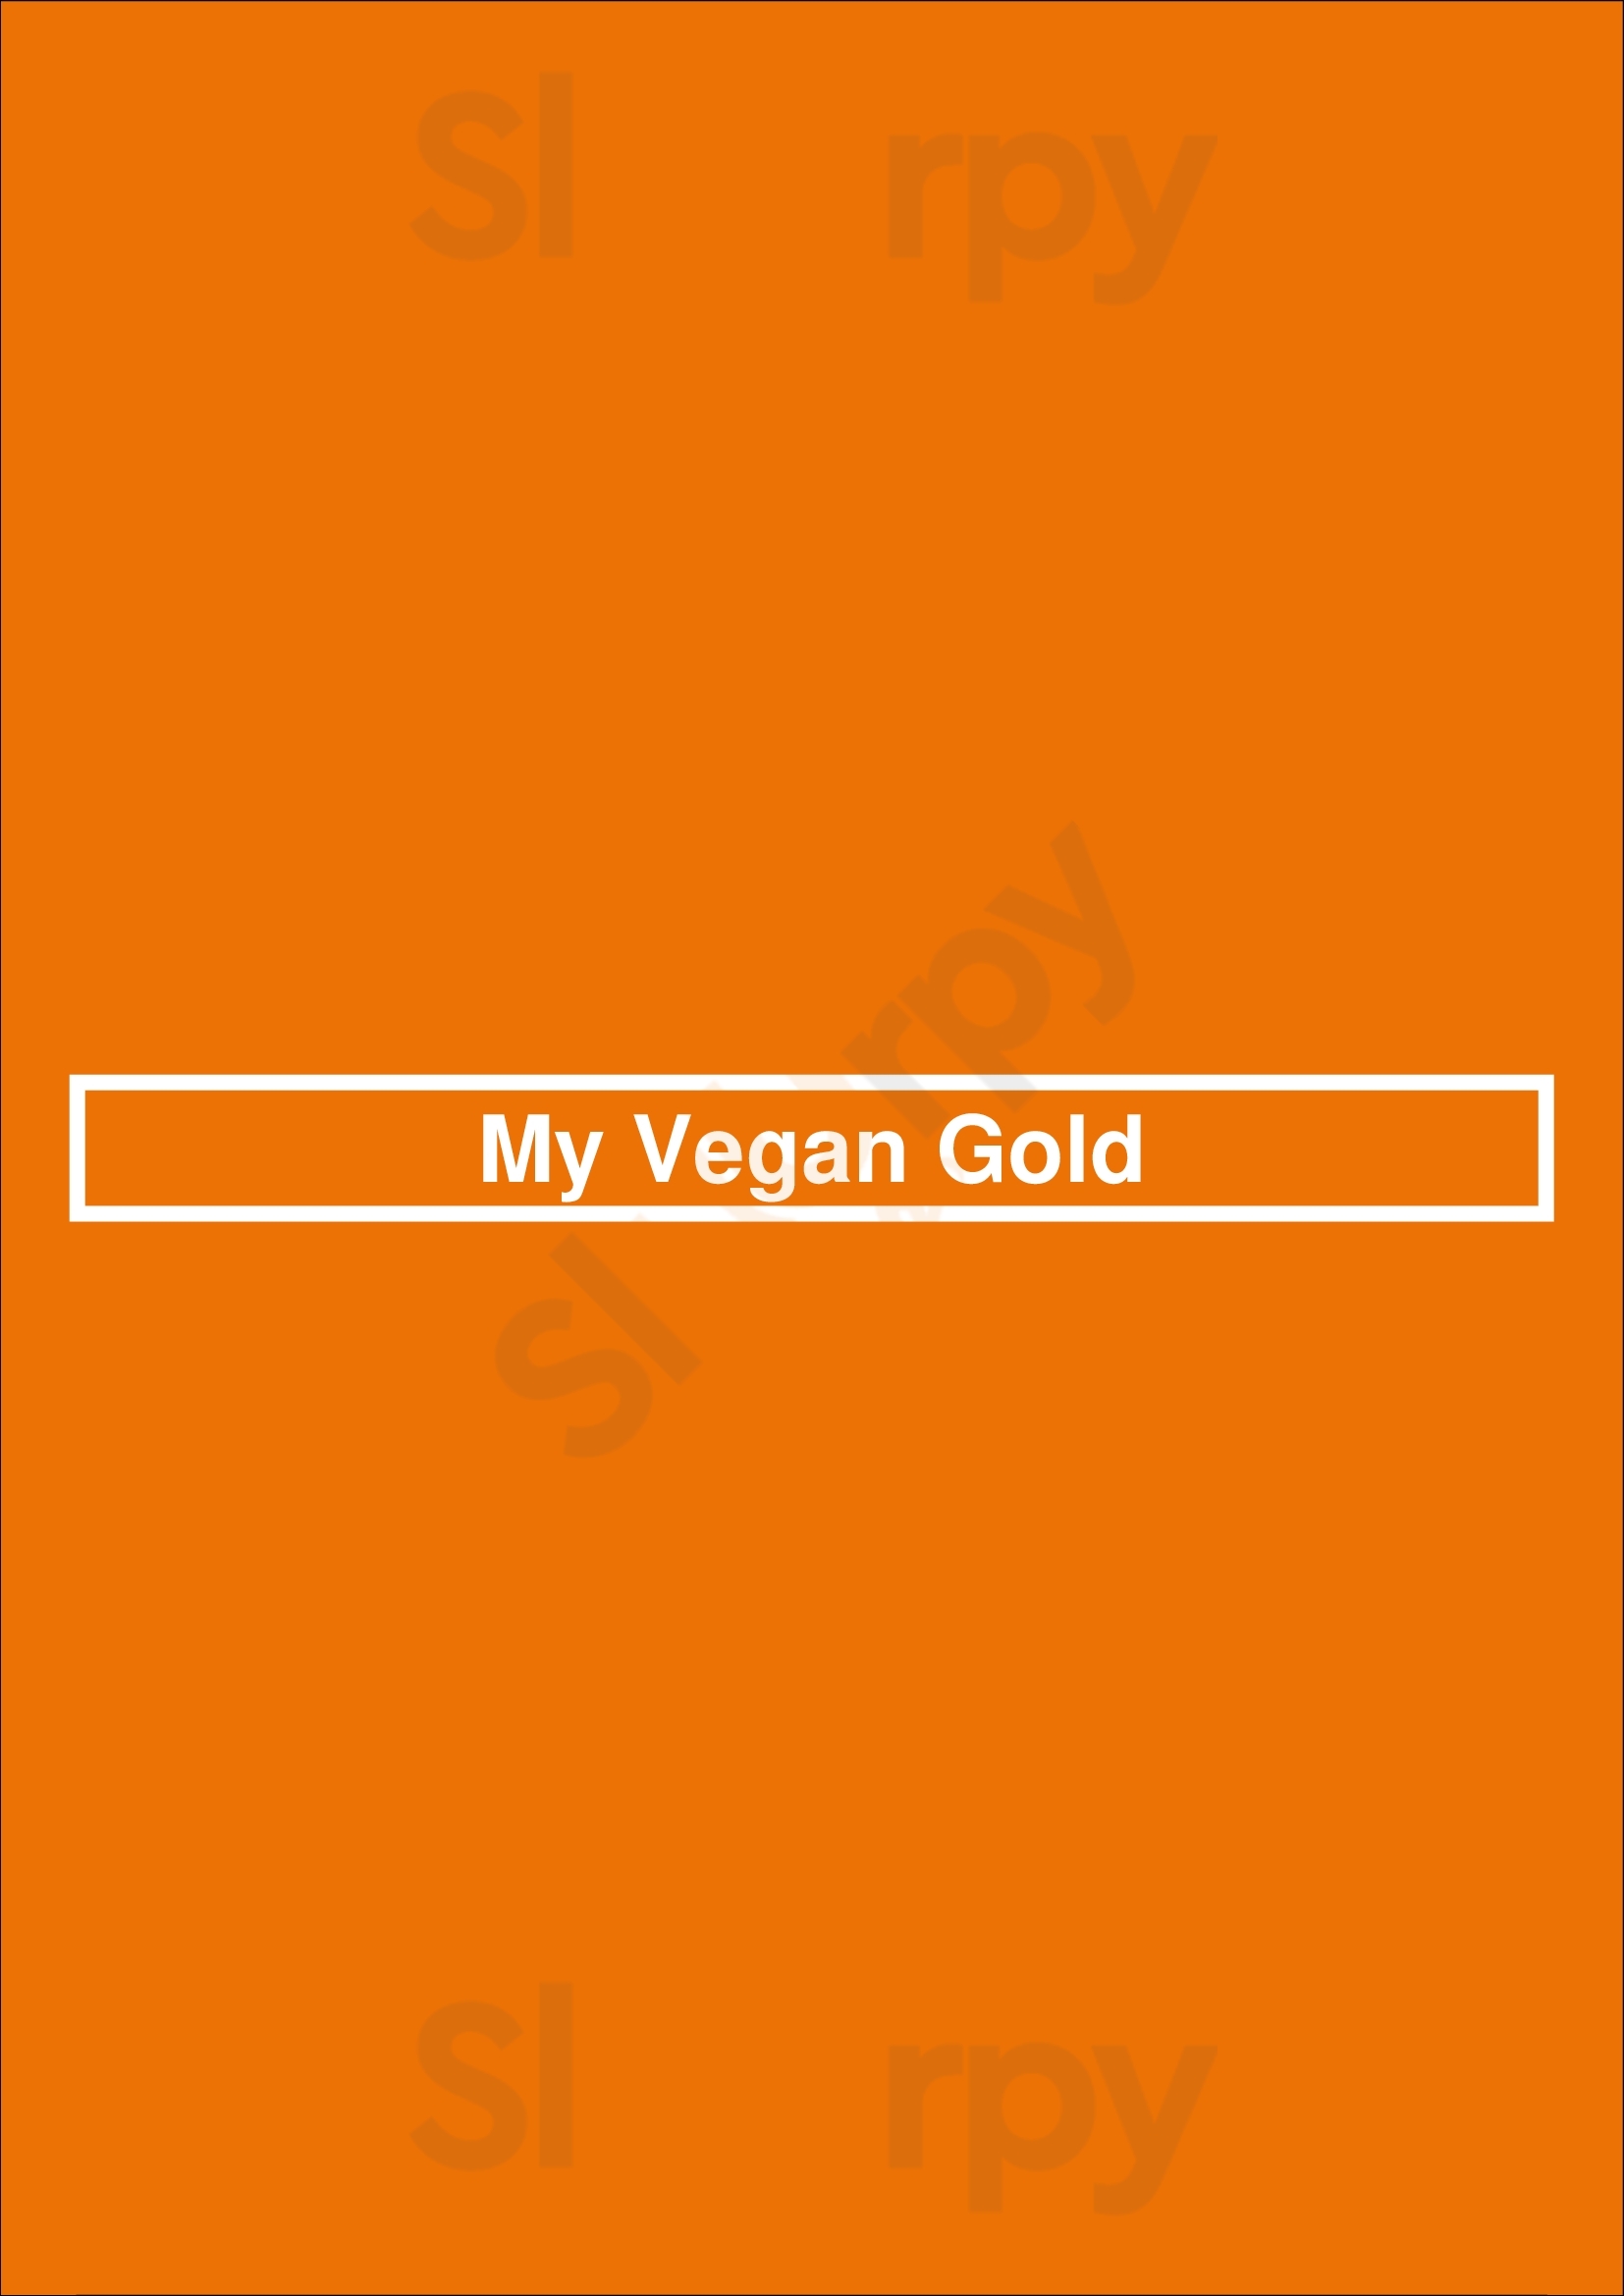 My Vegan Gold Los Angeles Menu - 1